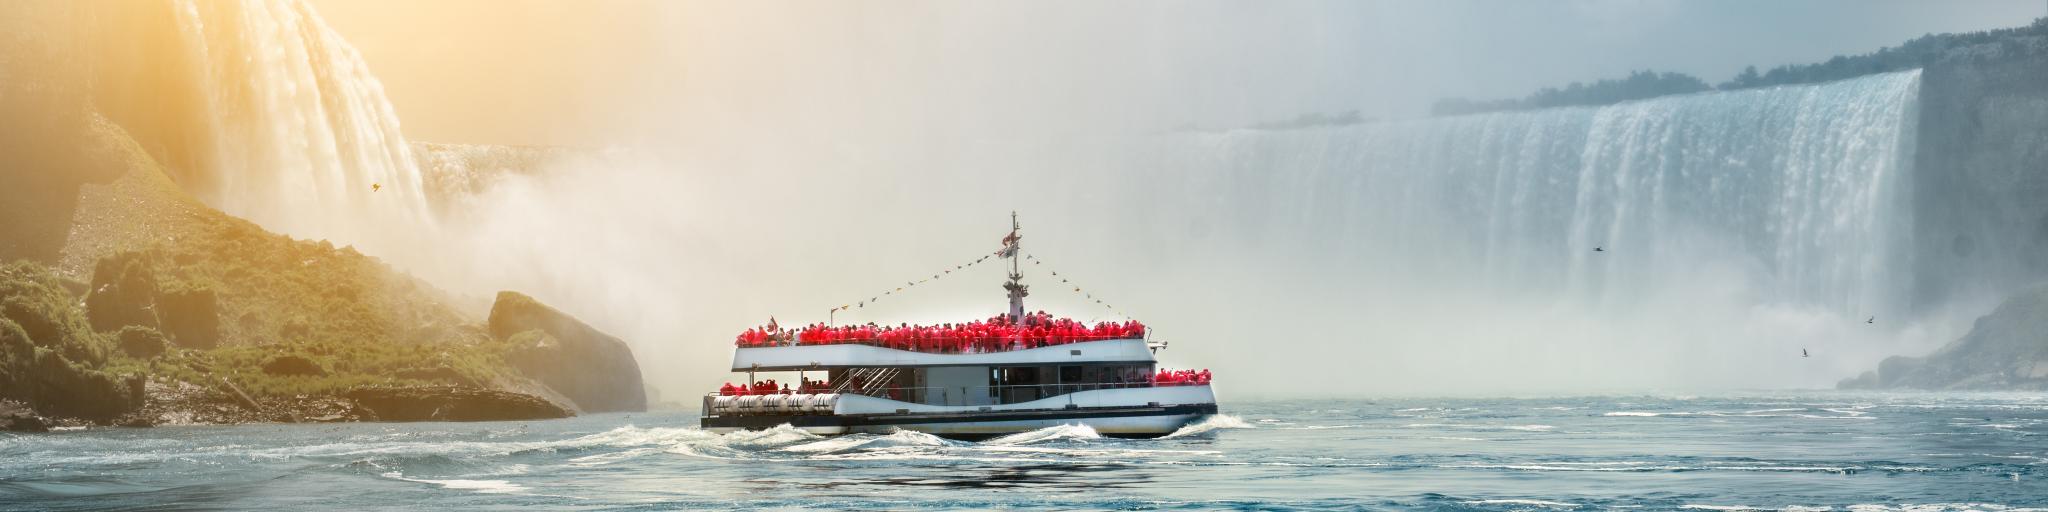 Boat tour at Niagara Falls, New York State